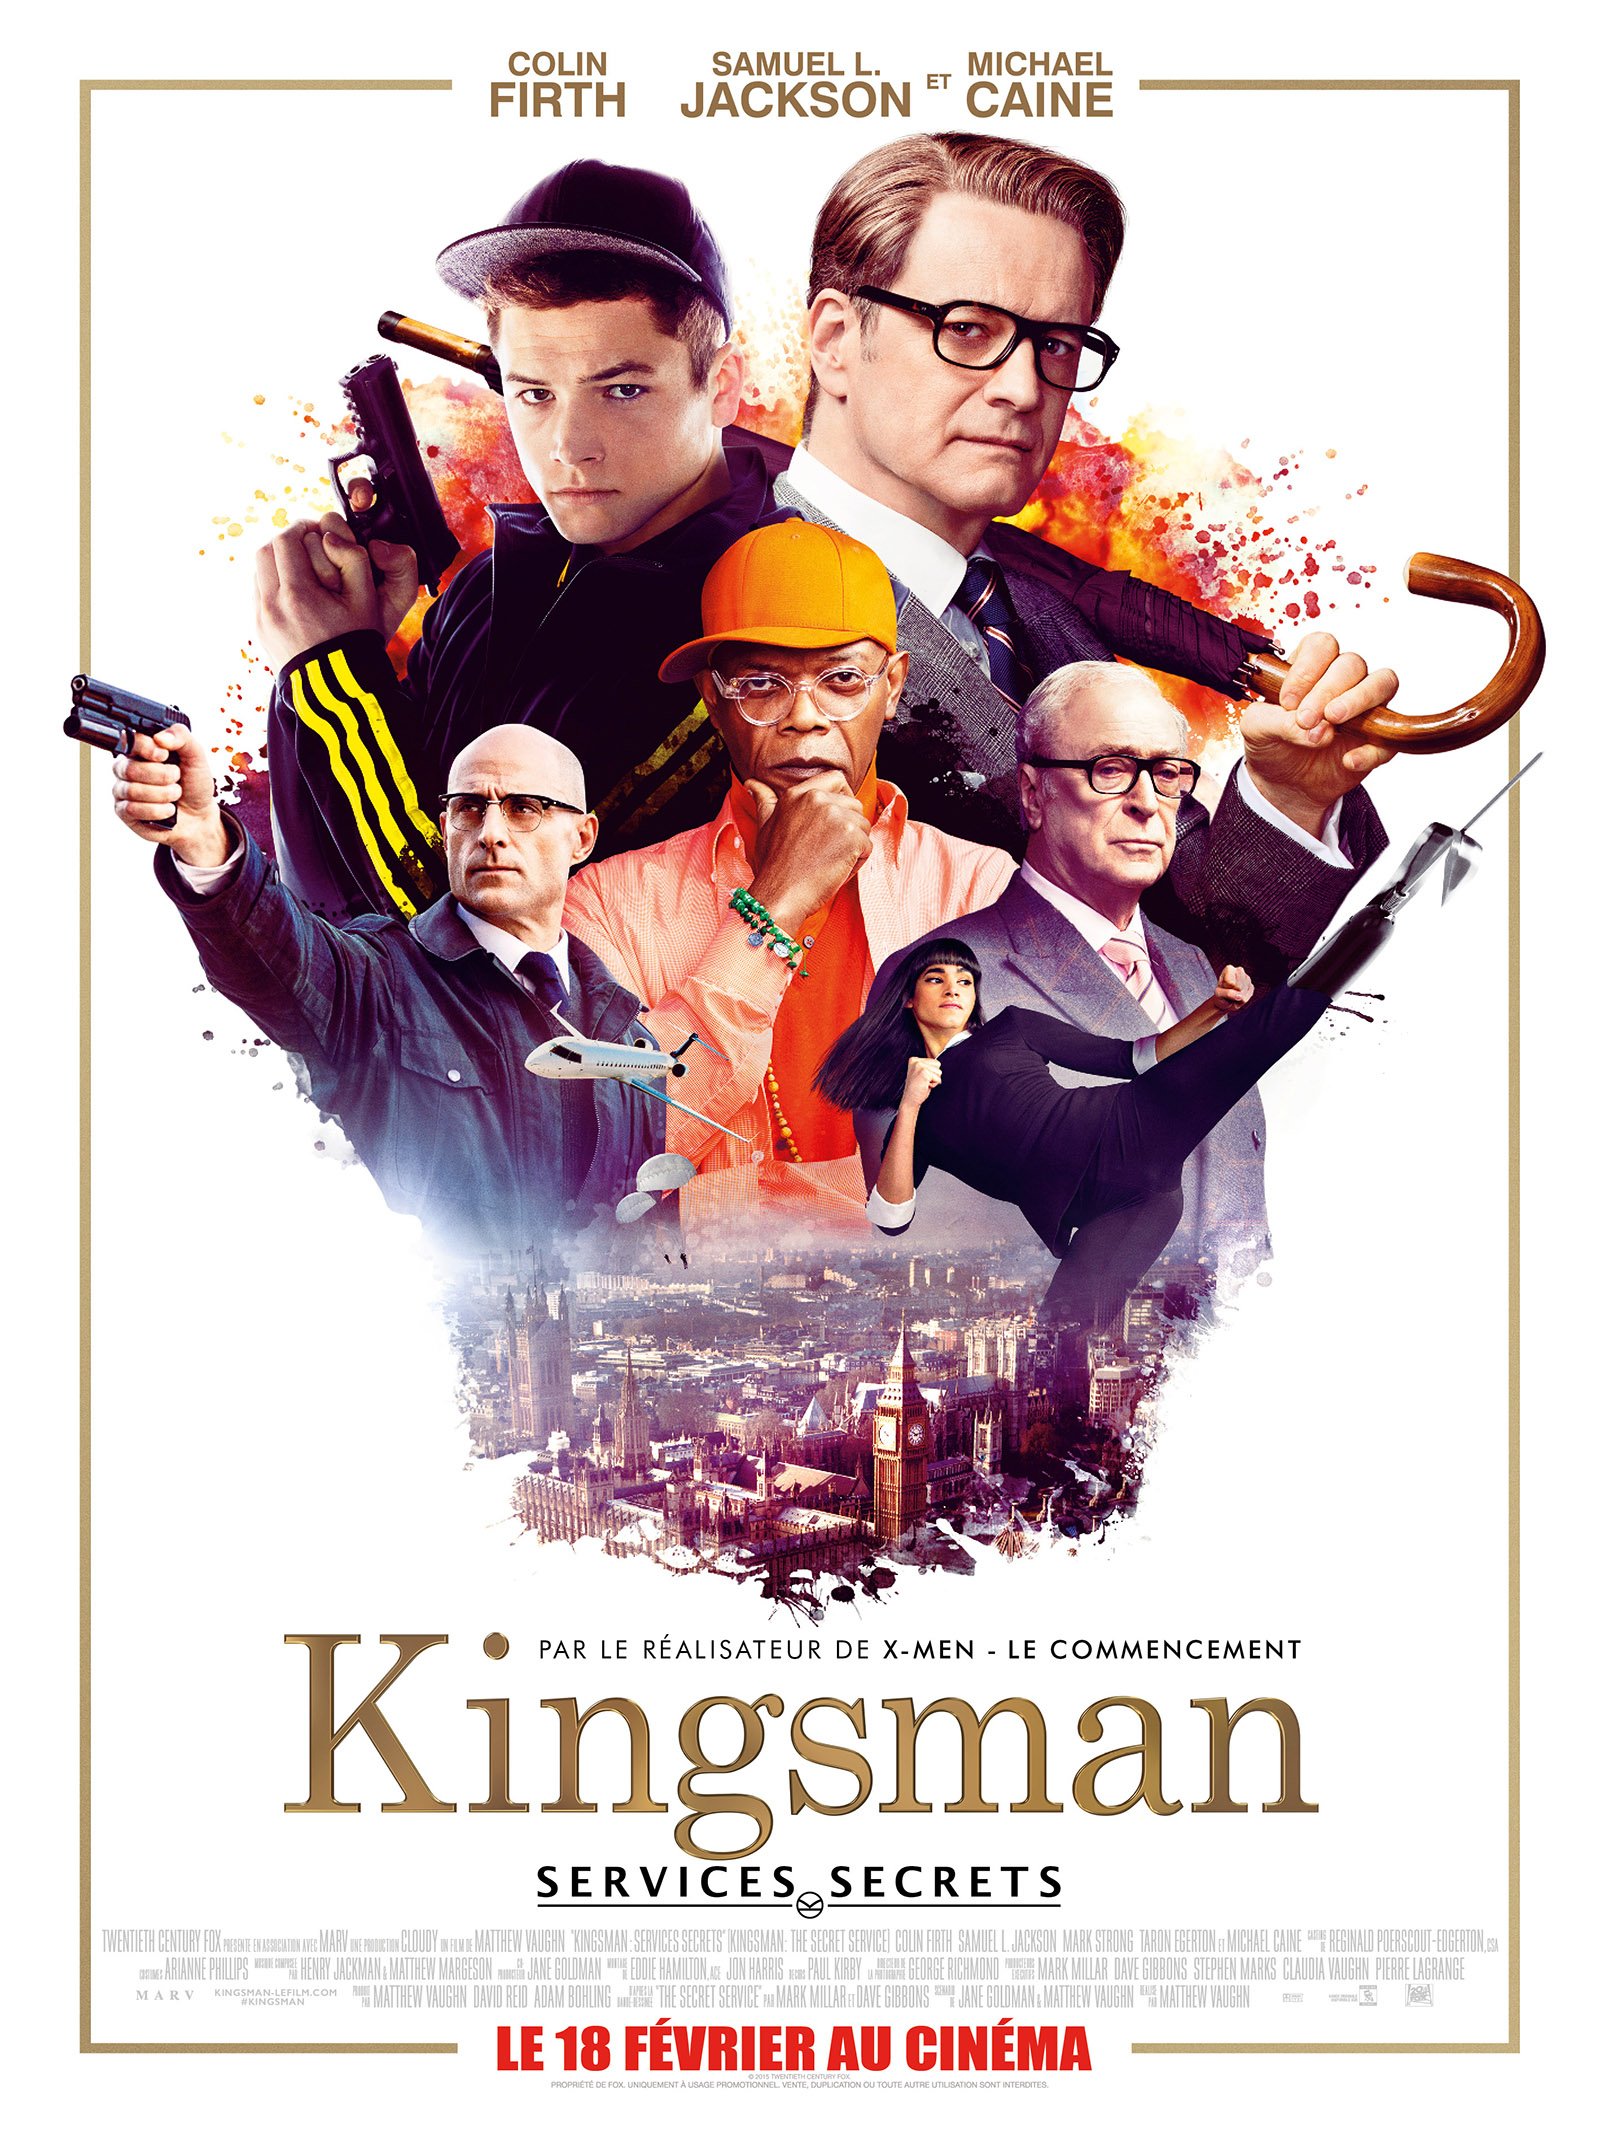 Kingsman Film